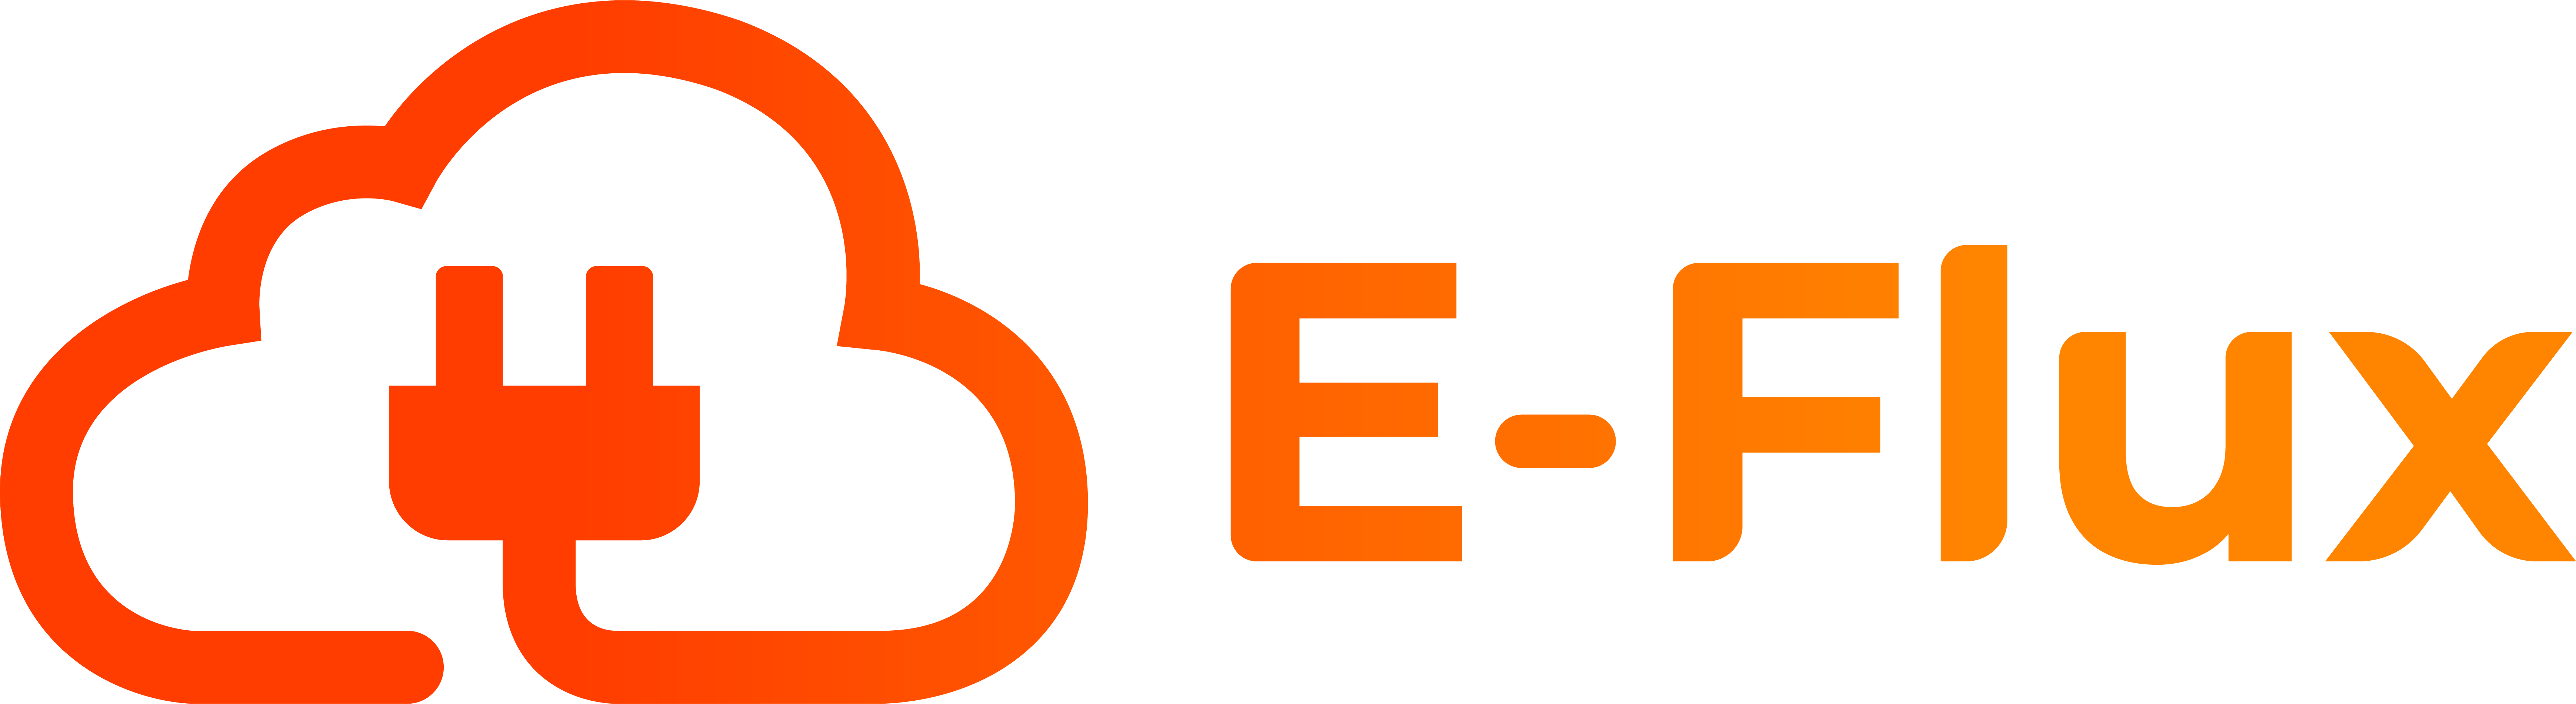 Charge card logo of E-Flux Orange | PAYC